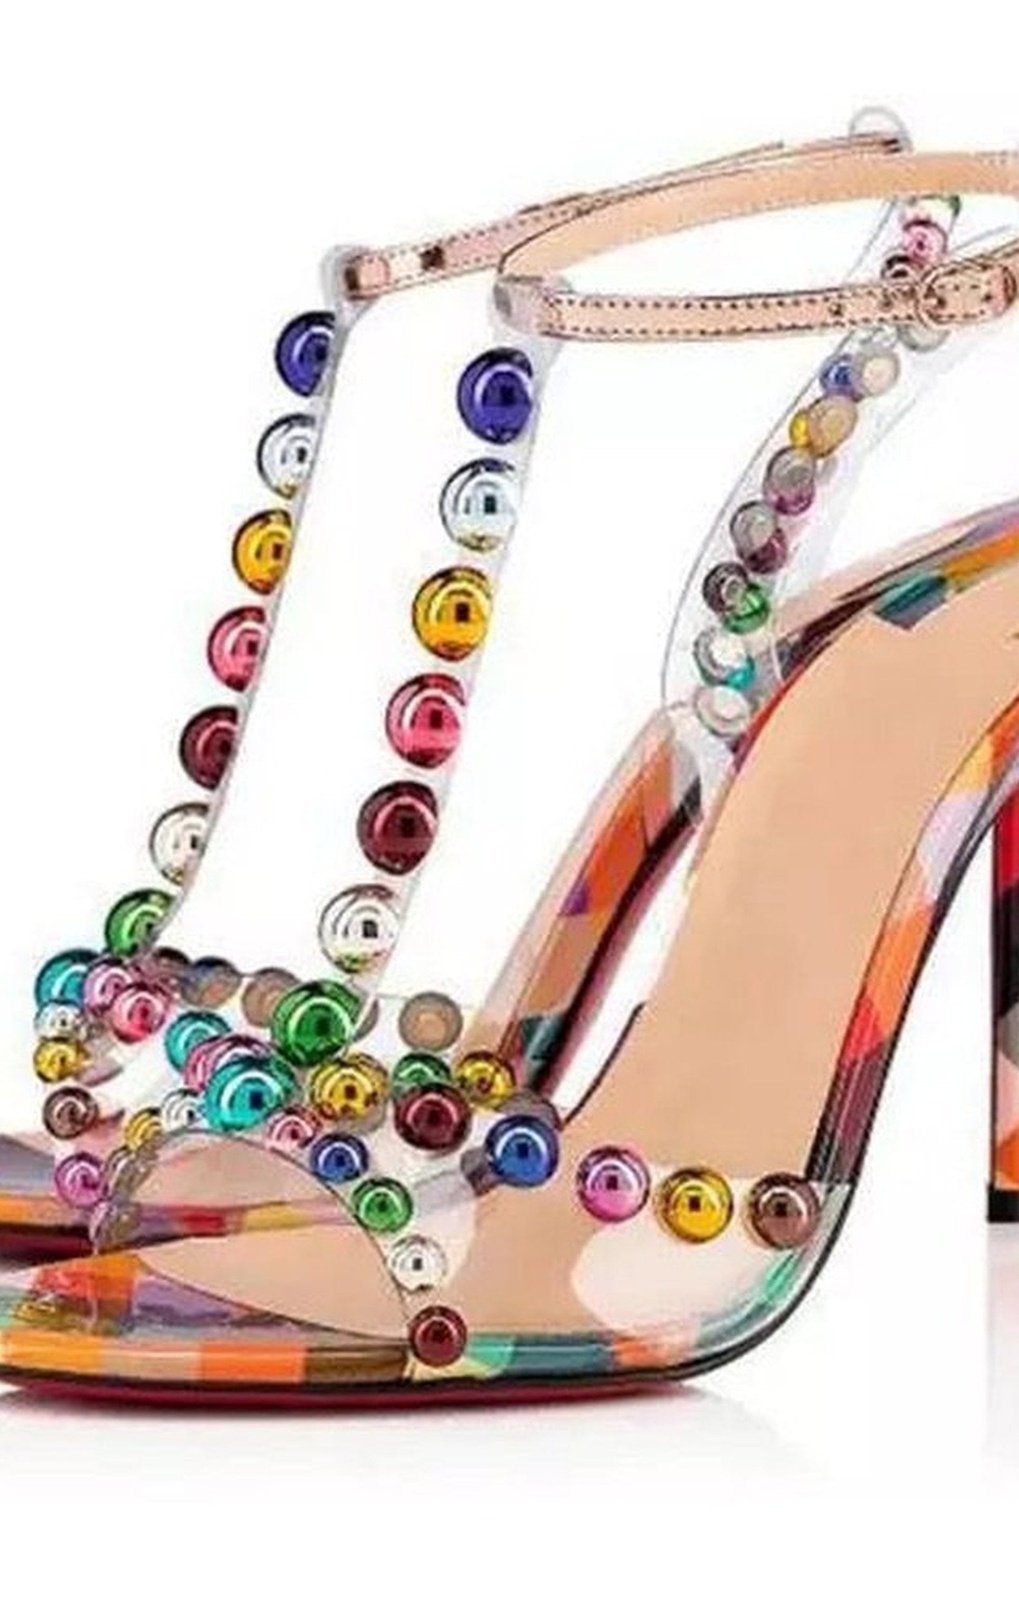 Colorful T Strap Sandals heels